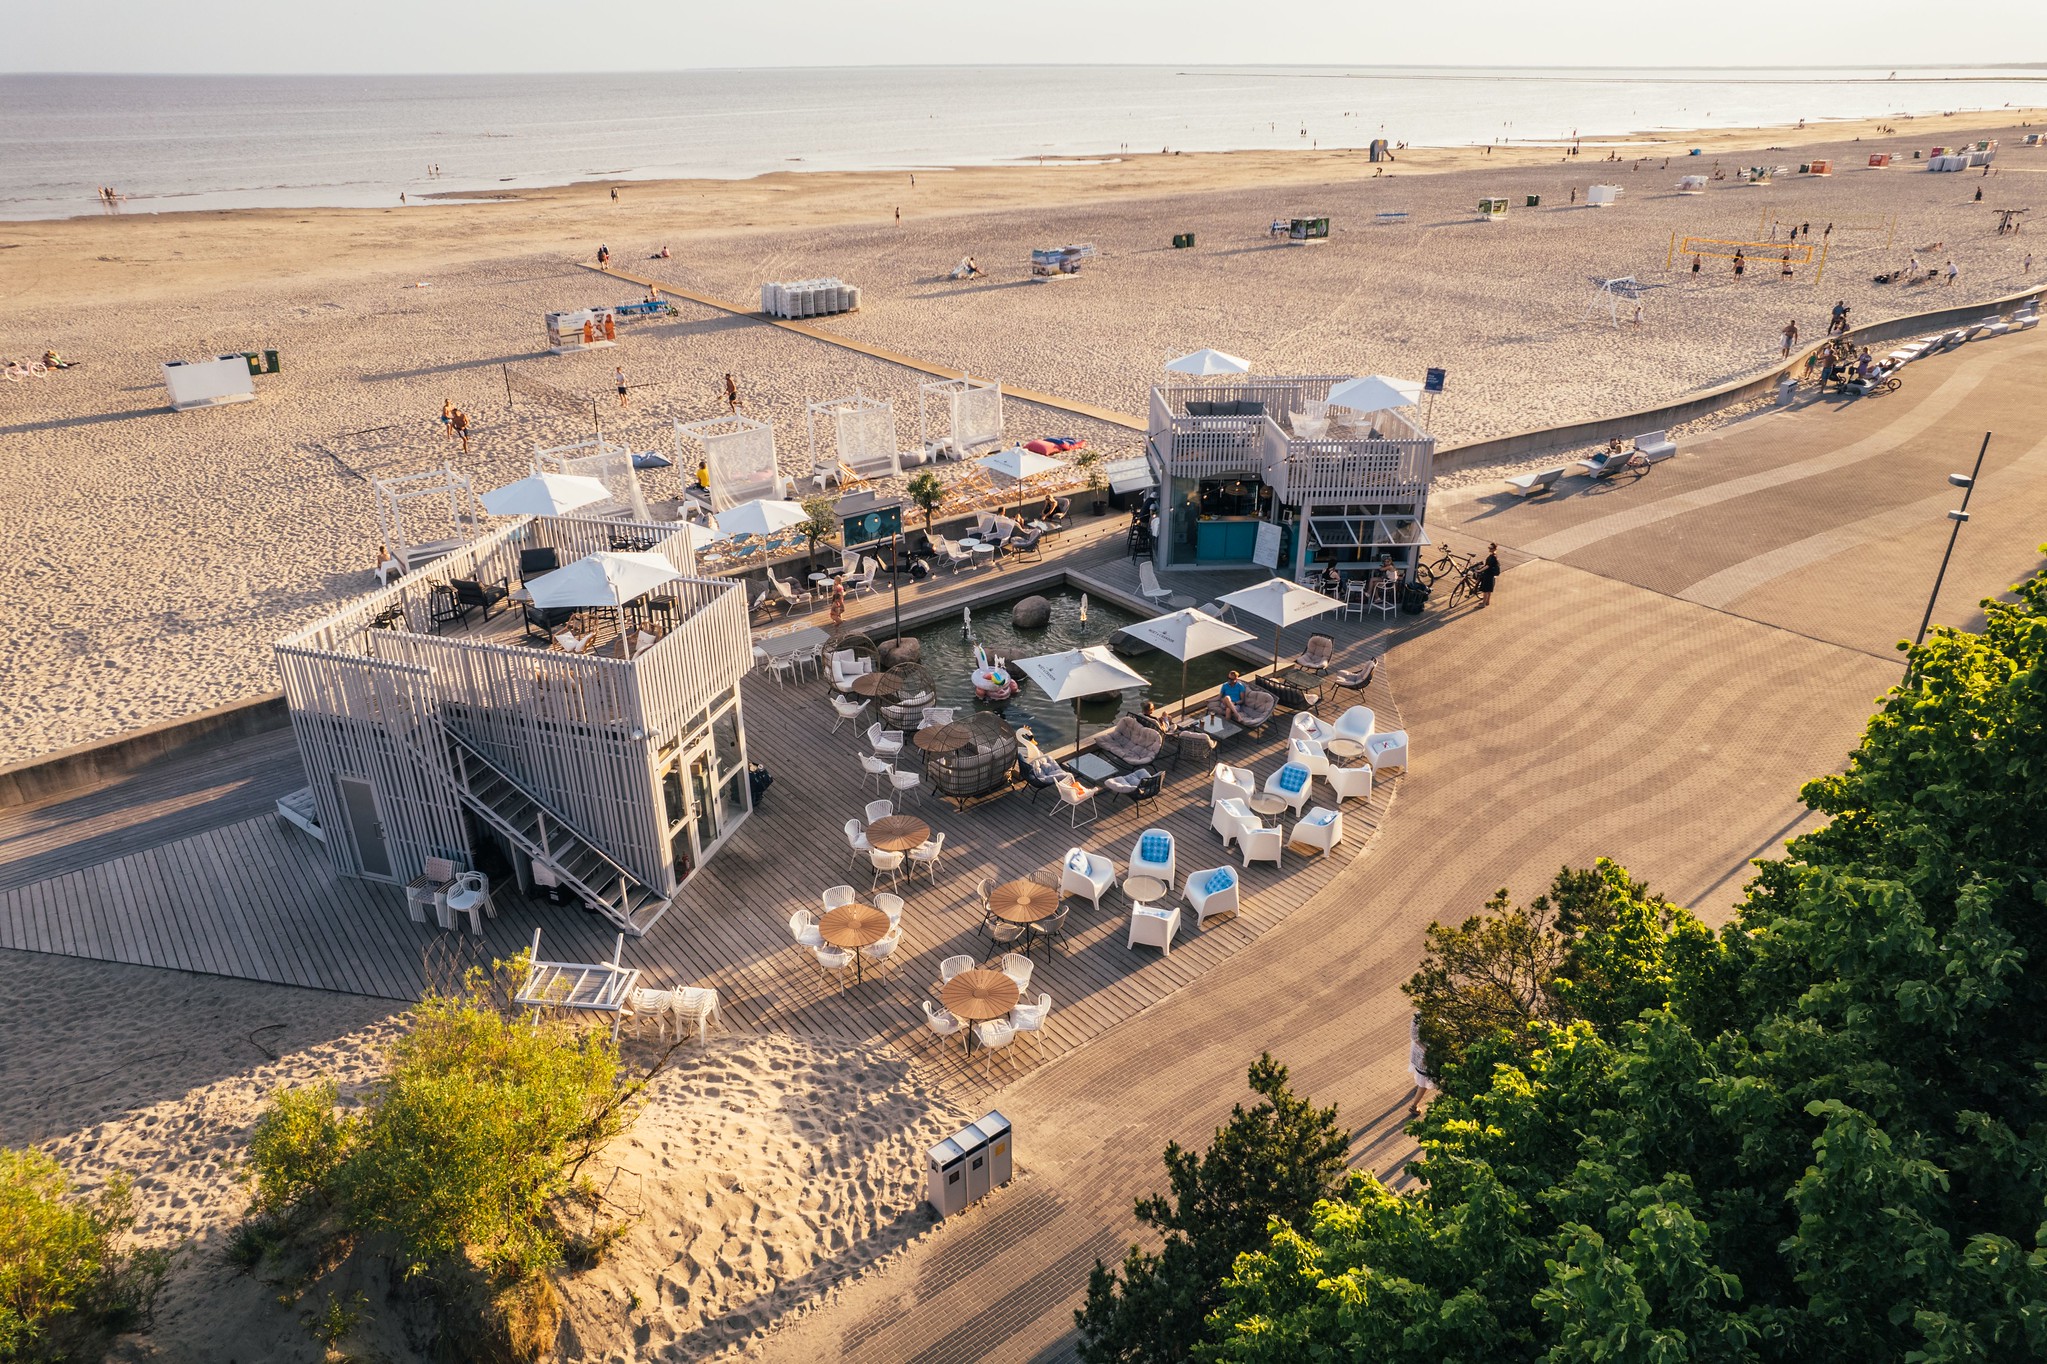 Beach Cafe and sandy beach in Pärnu